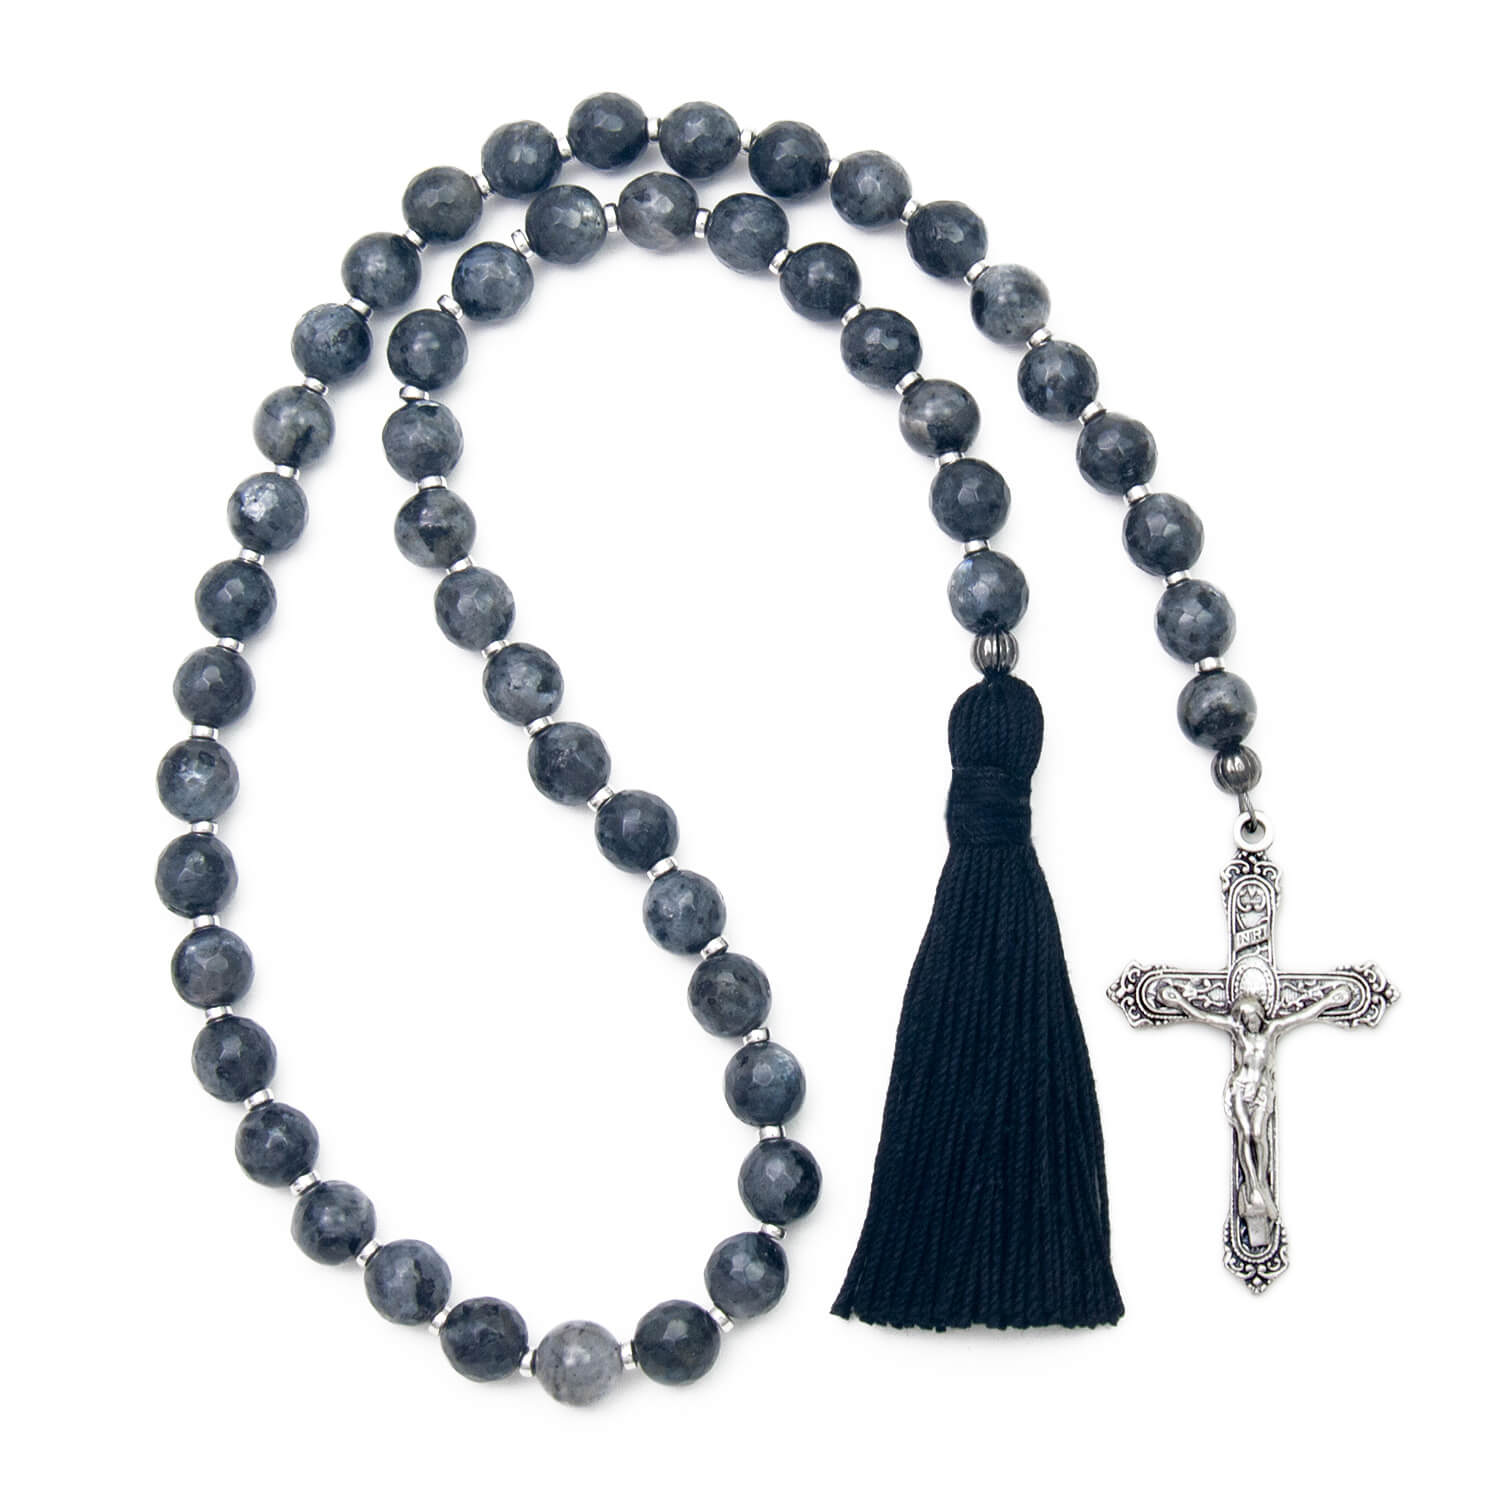 Paternoster Prayer Beads - Dark Labradorite